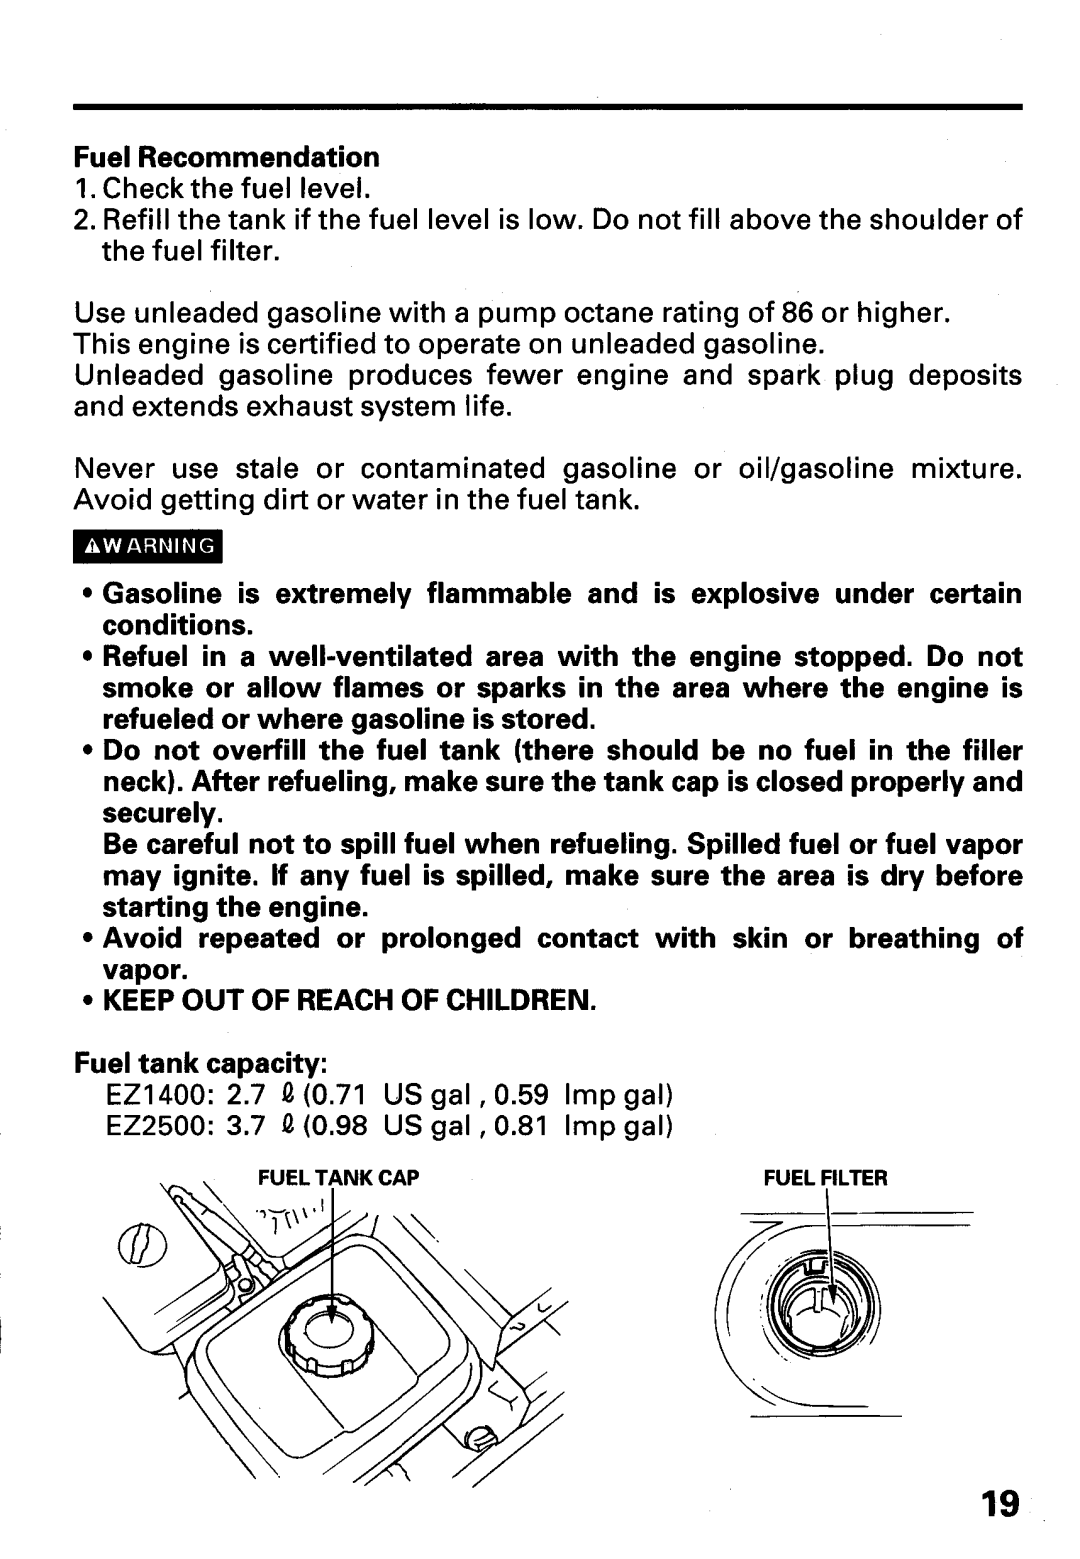 Honda Power Equipment EZ2500, EZ1400 manual 